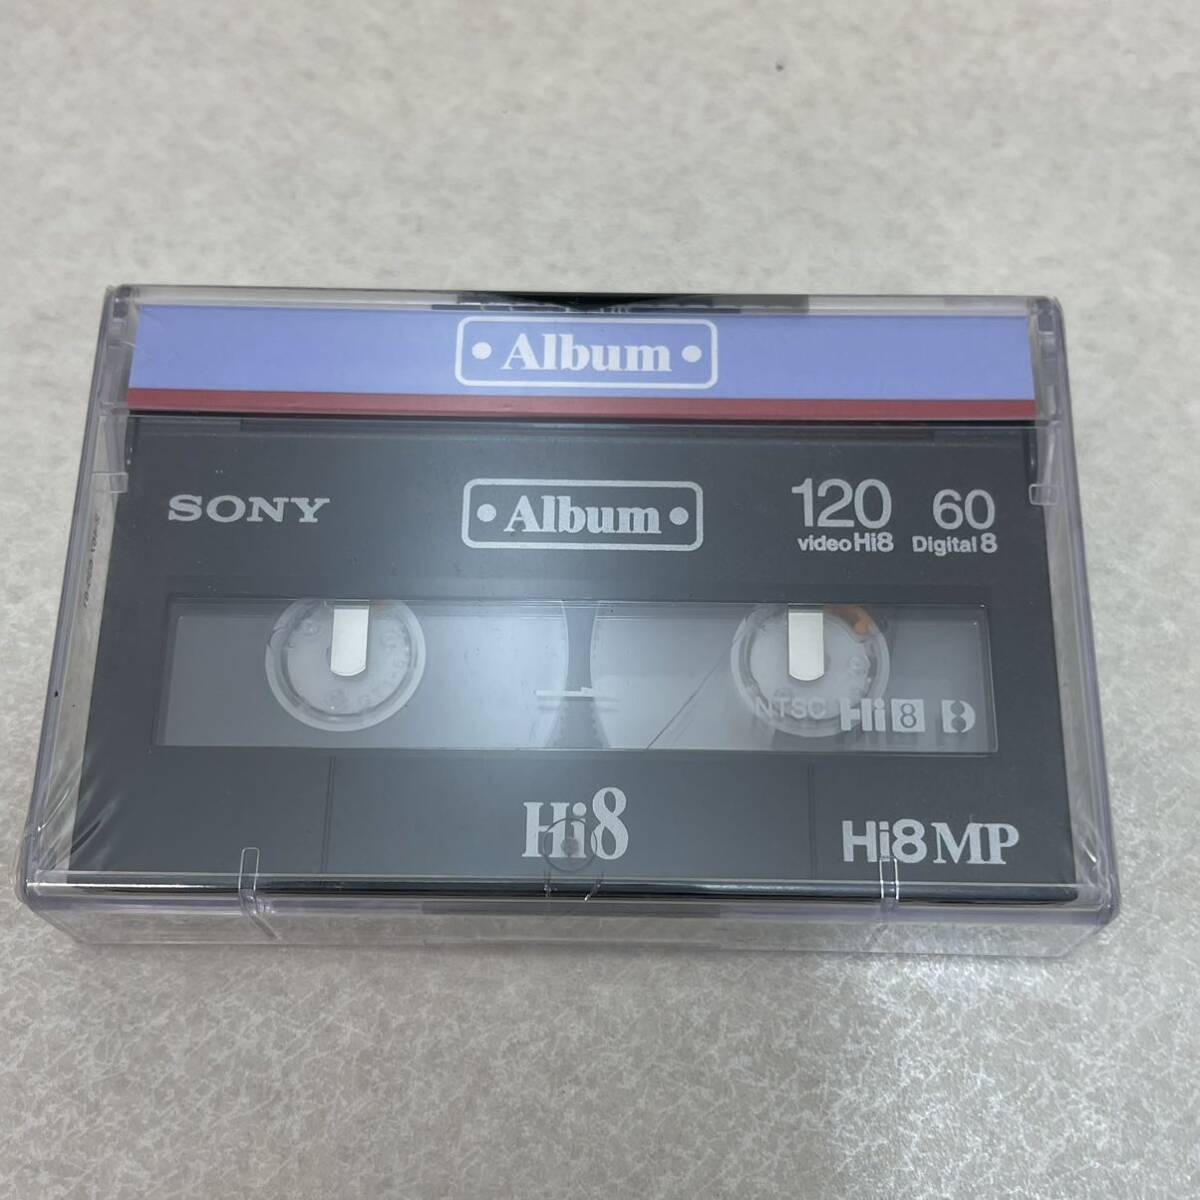 J2143★中古未使用品★ レトロ エコーソニック カセットテープ CVS ELN 60 、SONY Album Hi8 MP 120の画像5